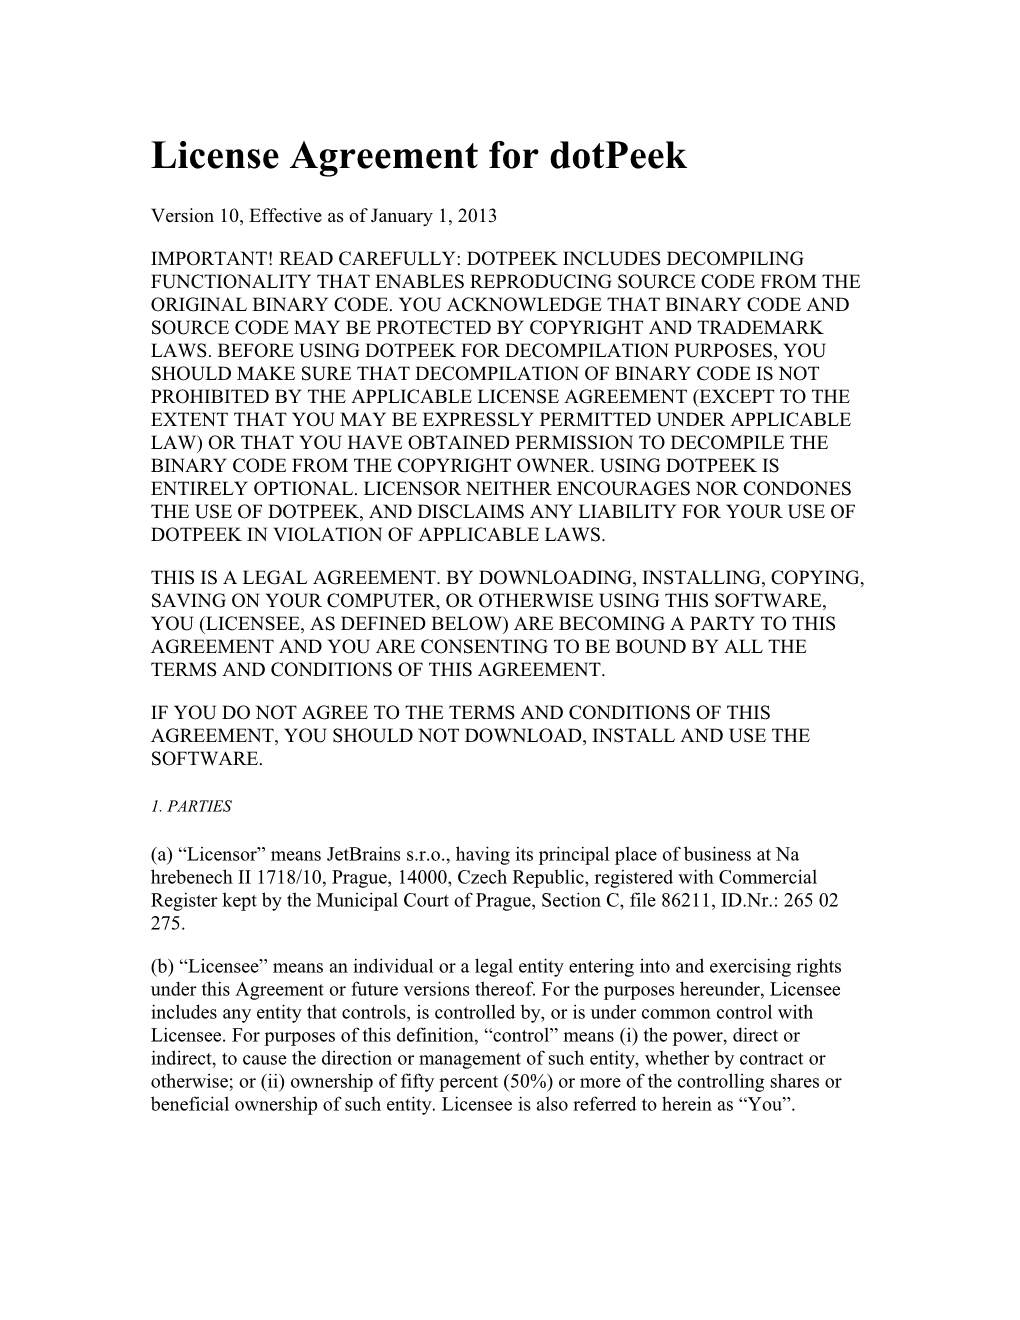 License Agreement for Dotpeek